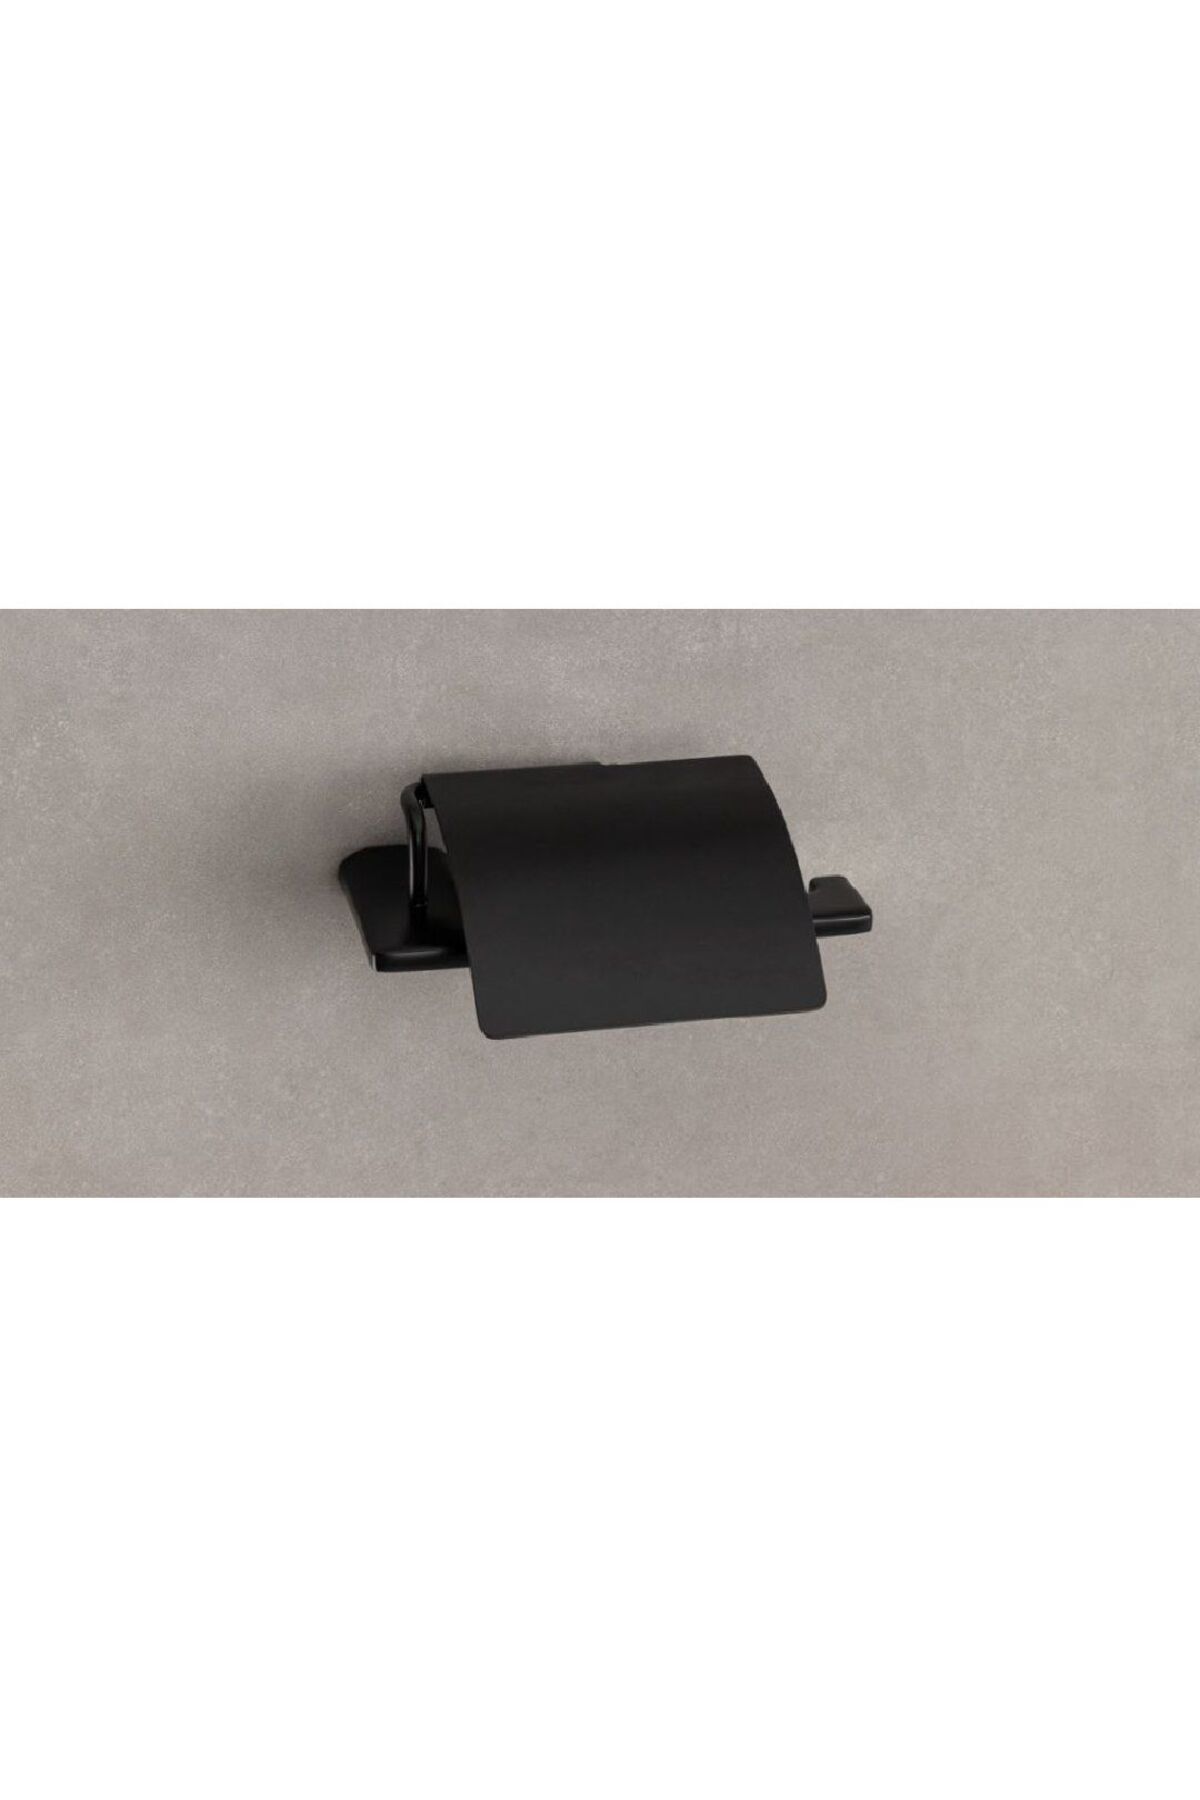 Slımo Kapaklı Tuvalet Kağıtlığı Siyah Renk 85X118X170 mm